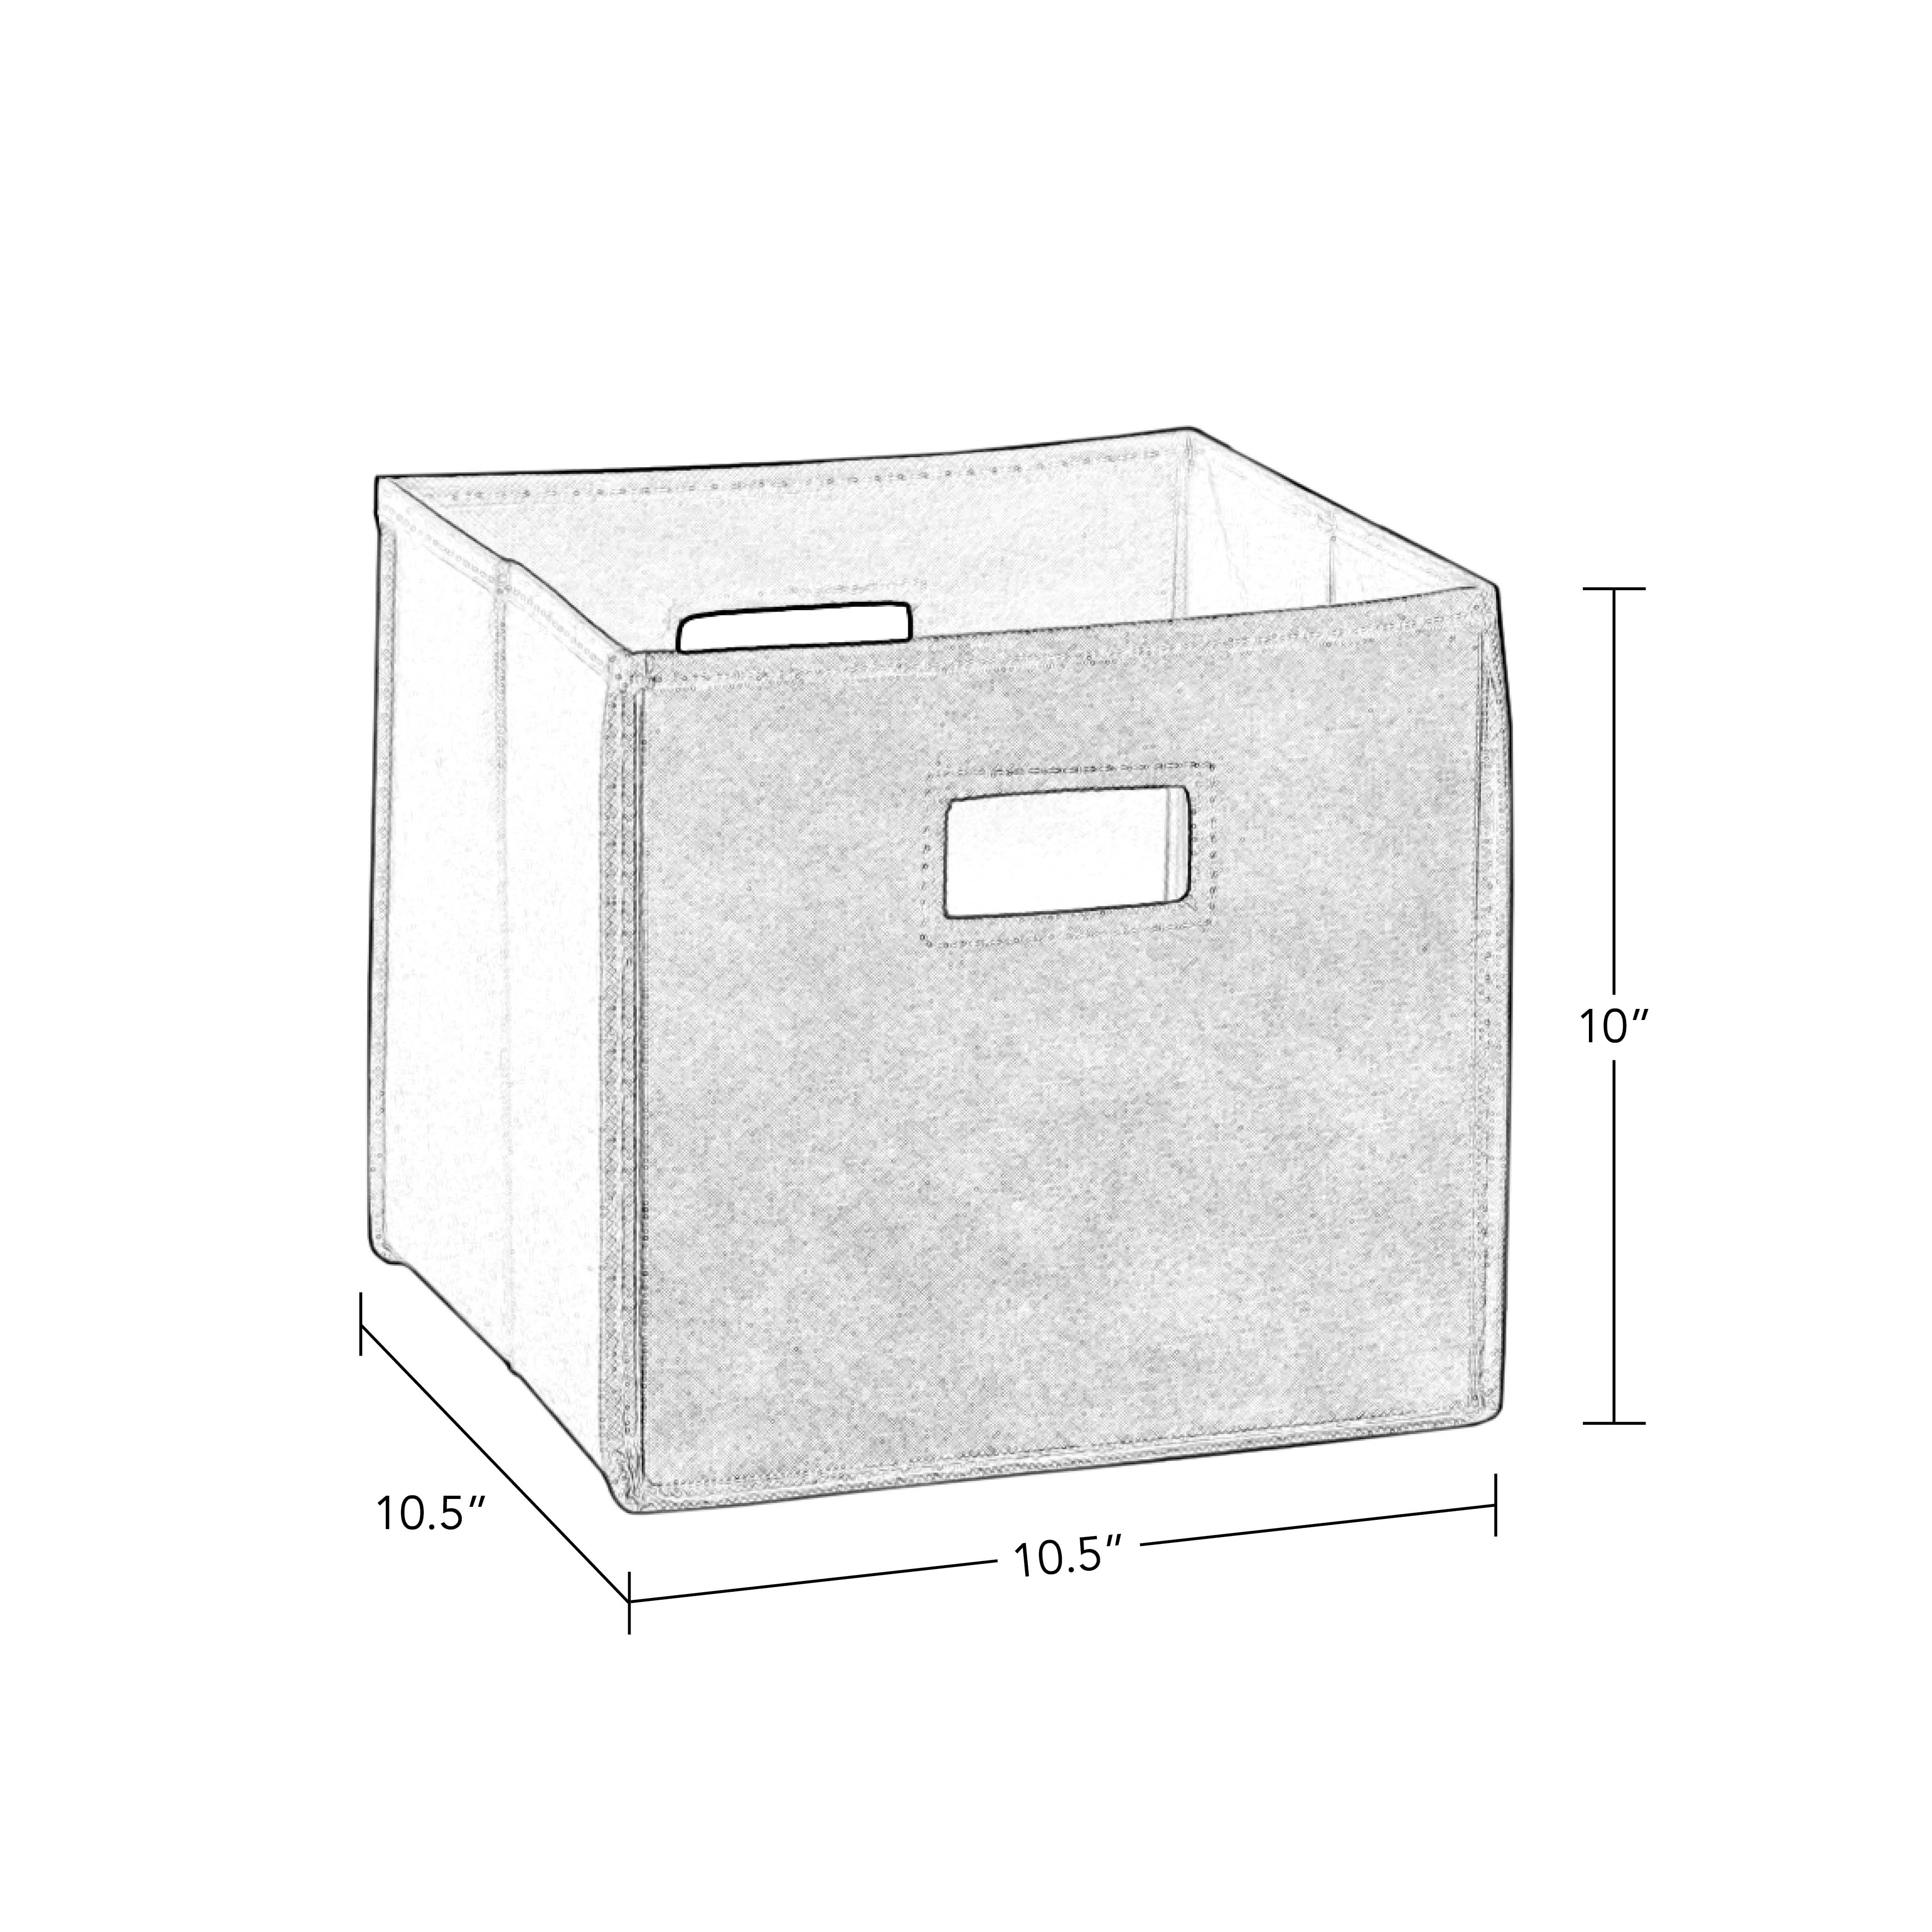 RiverRidge Home Folding Fabric Cube Storage Bin Set of 2 - Turquoise - image 3 of 10